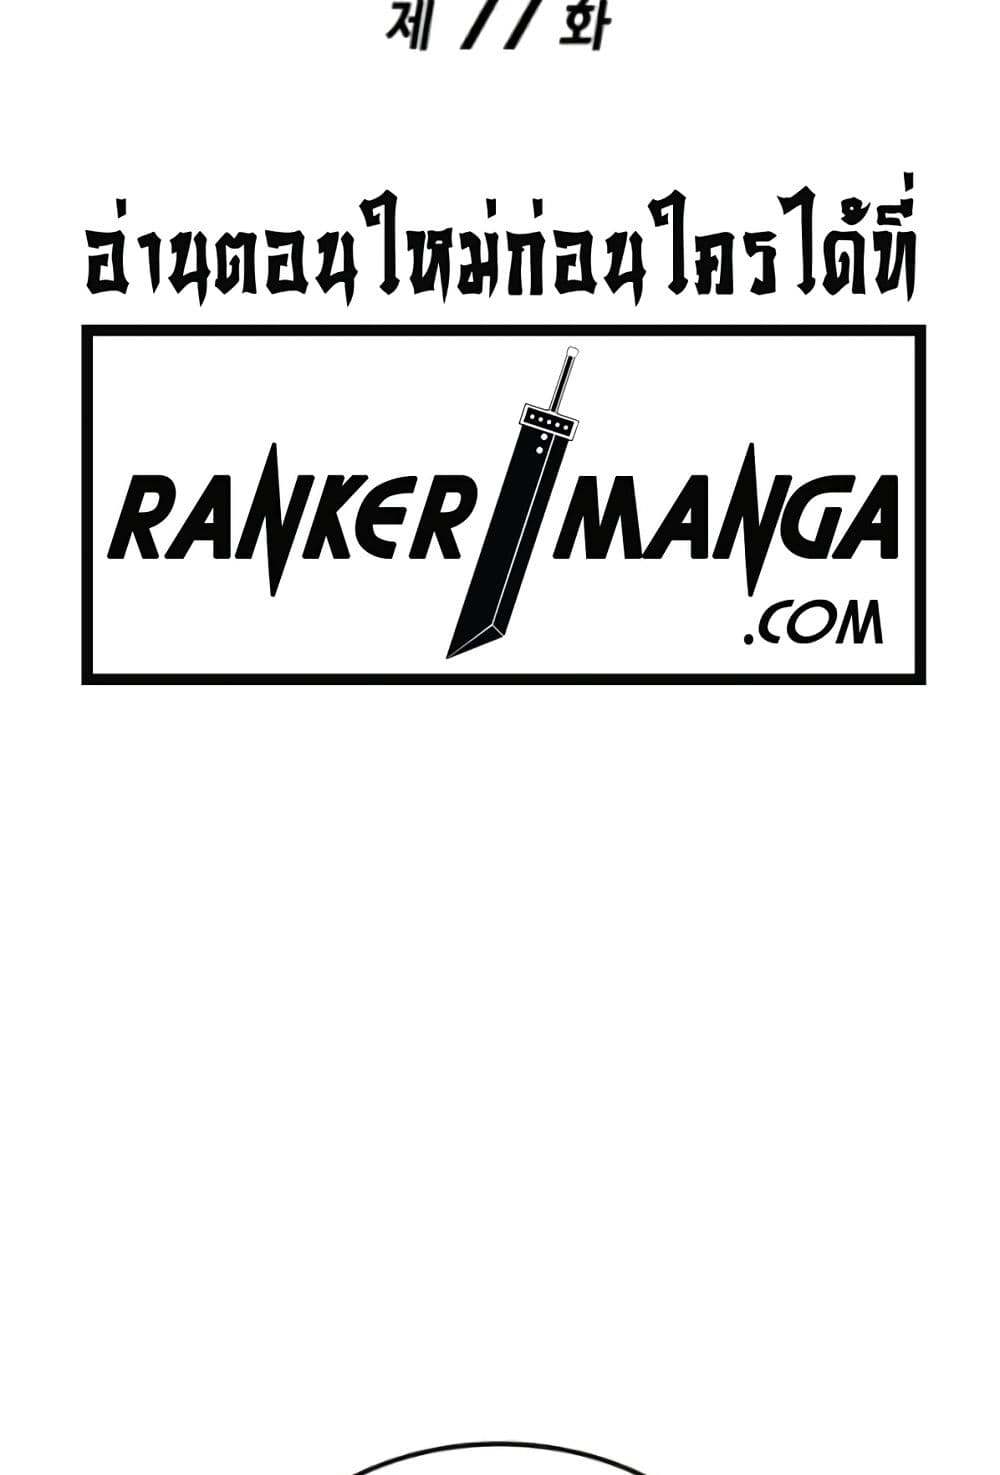 Ranker's Return (Remake) 77-77